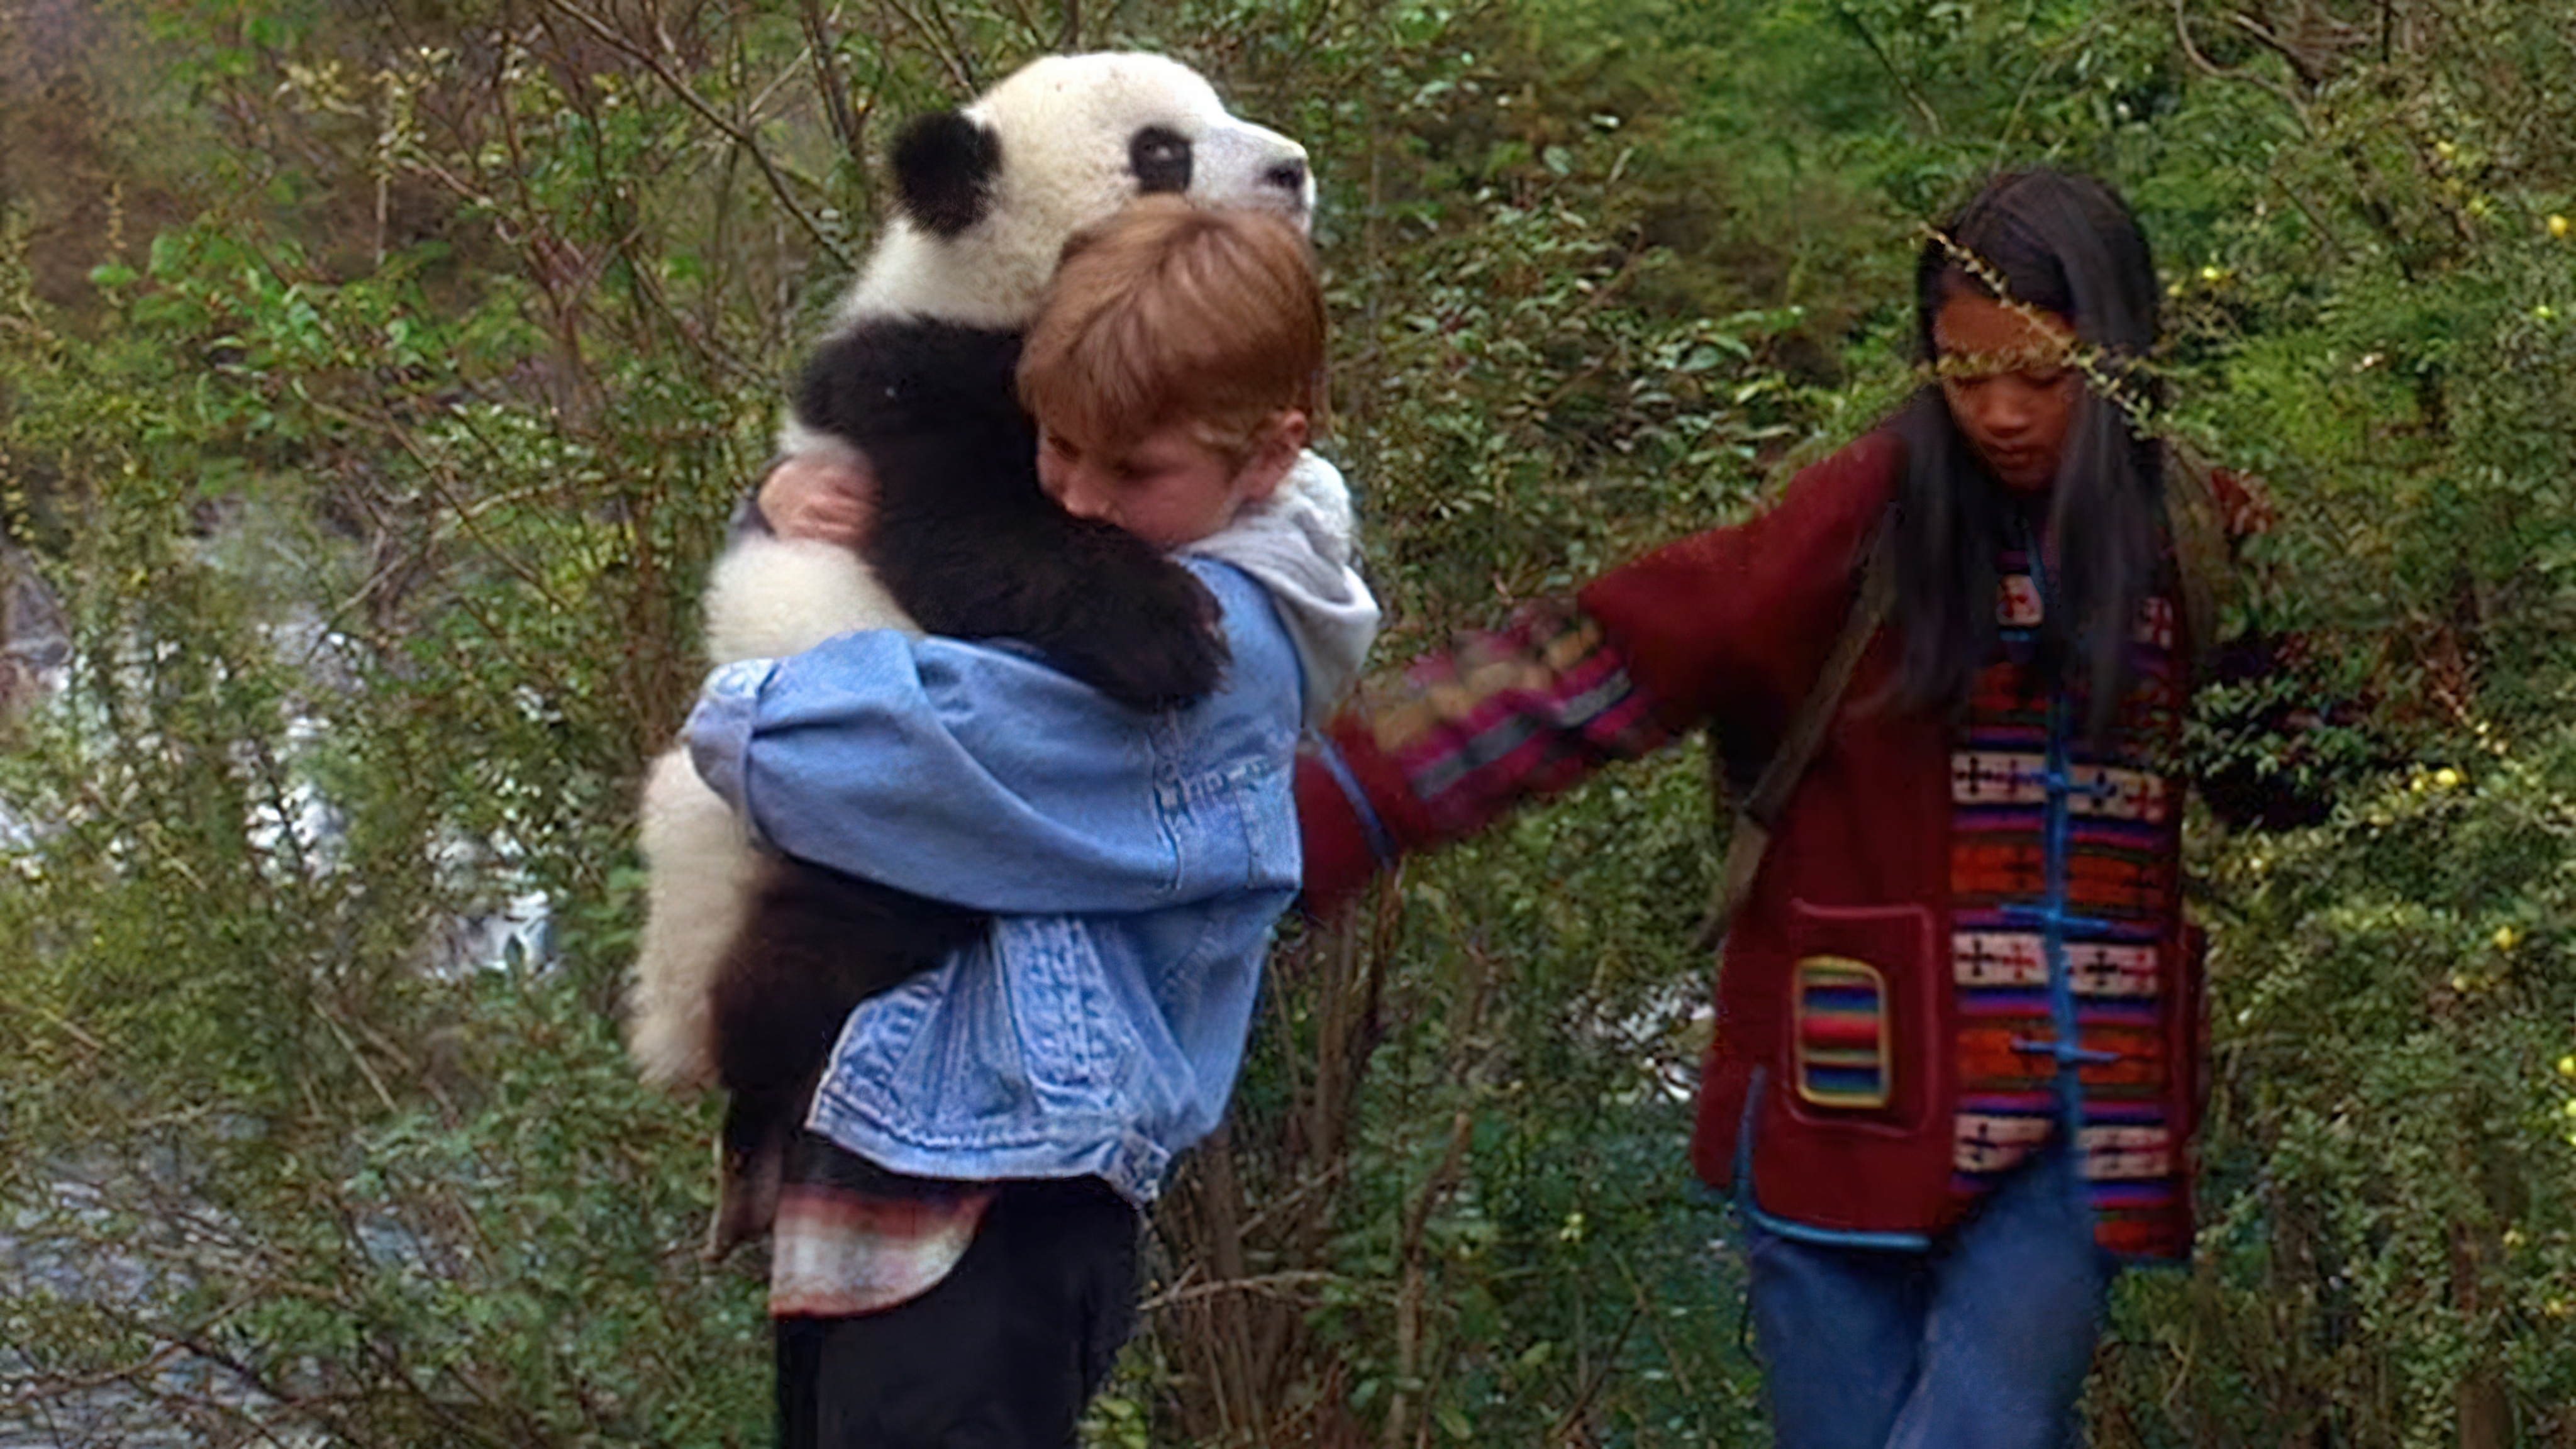 The Amazing Panda Adventure (1995) แพนด้าน้อยผจญภัยสุดขอบฟ้า